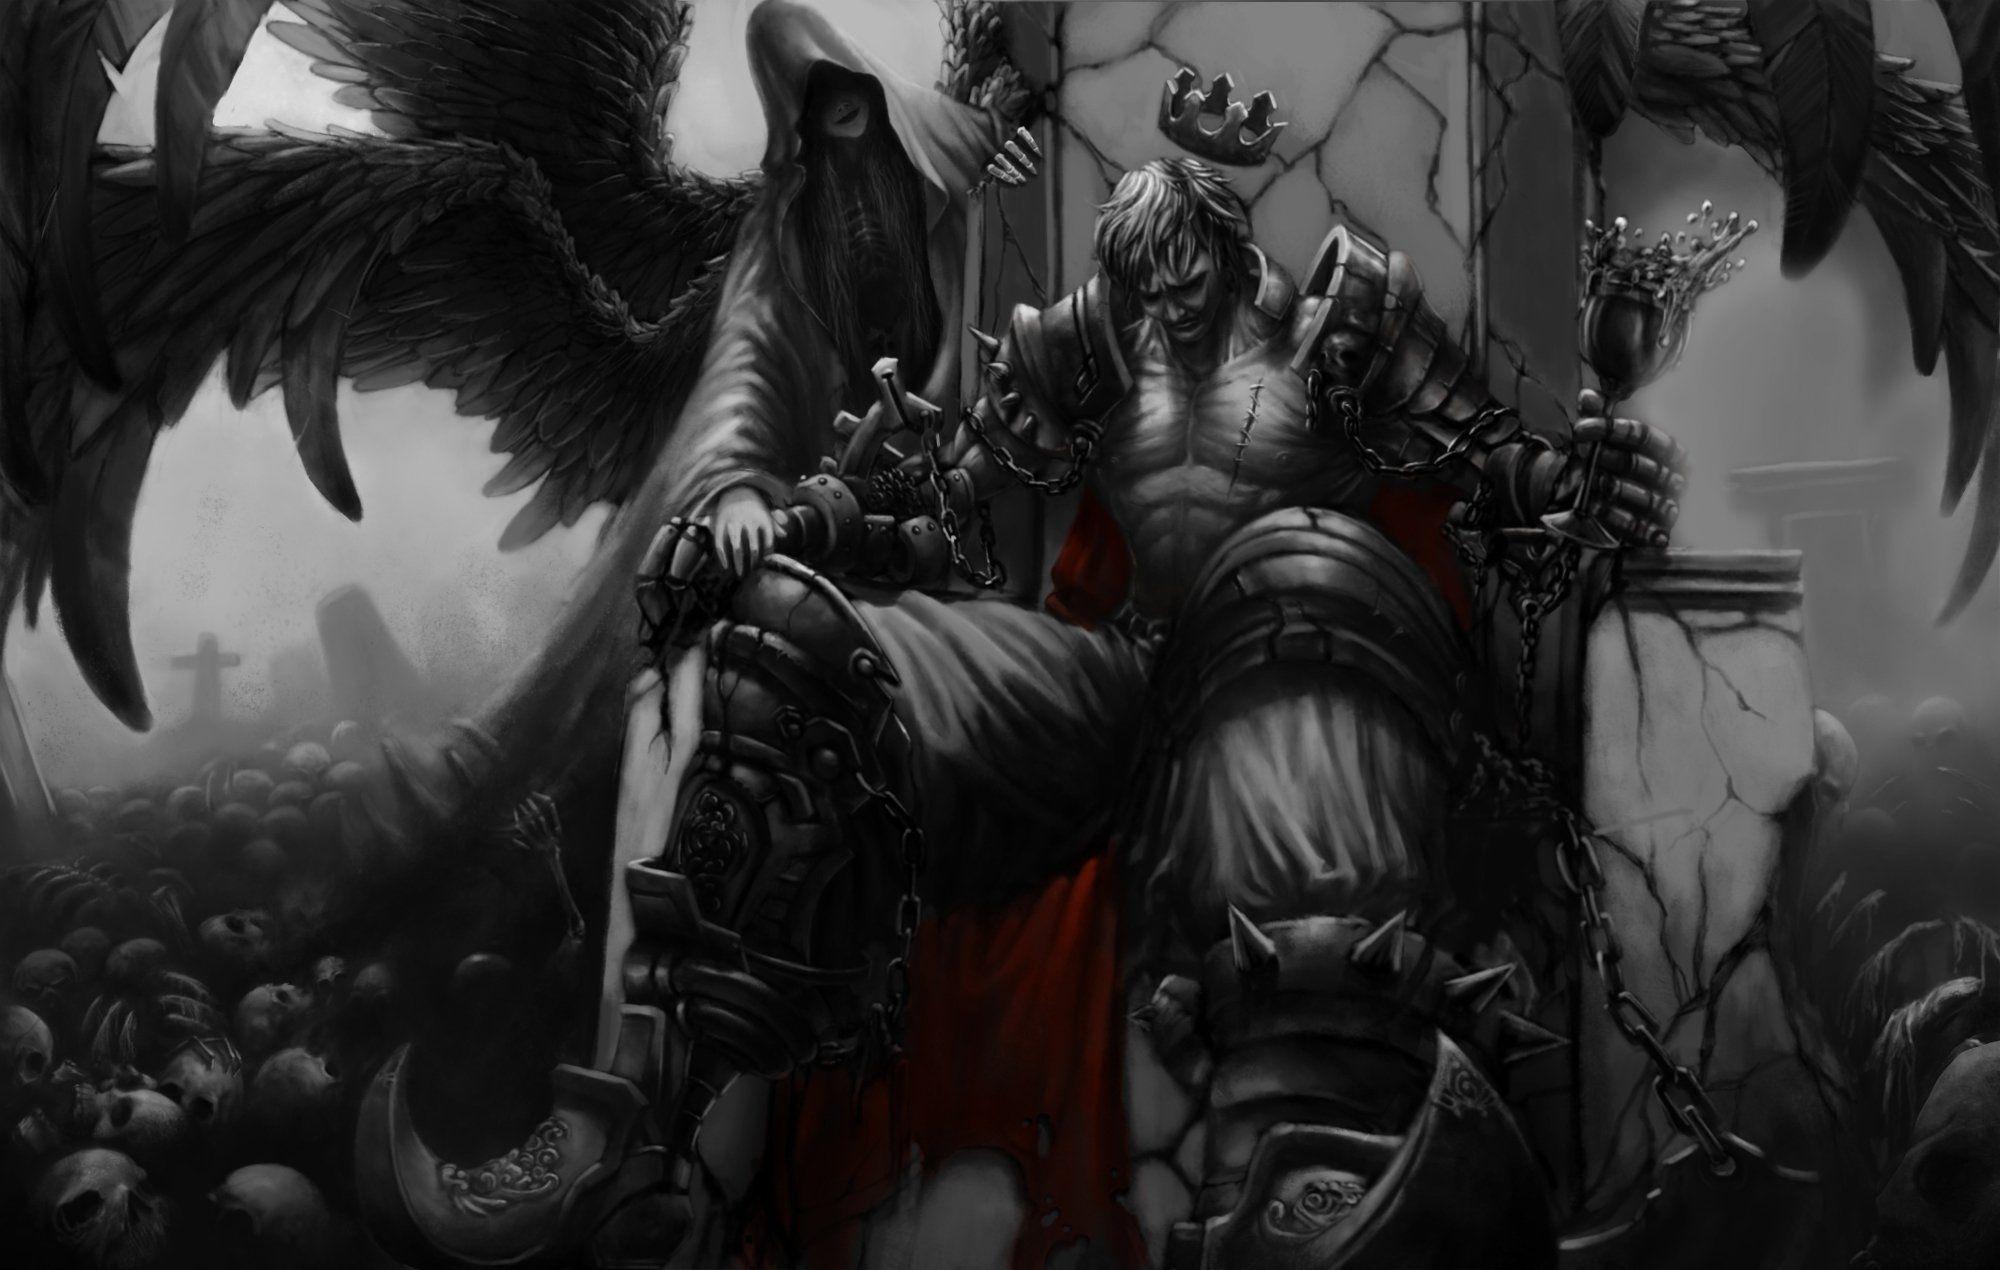 Demon King wallpaper by Scythe6669  Download on ZEDGE  3381